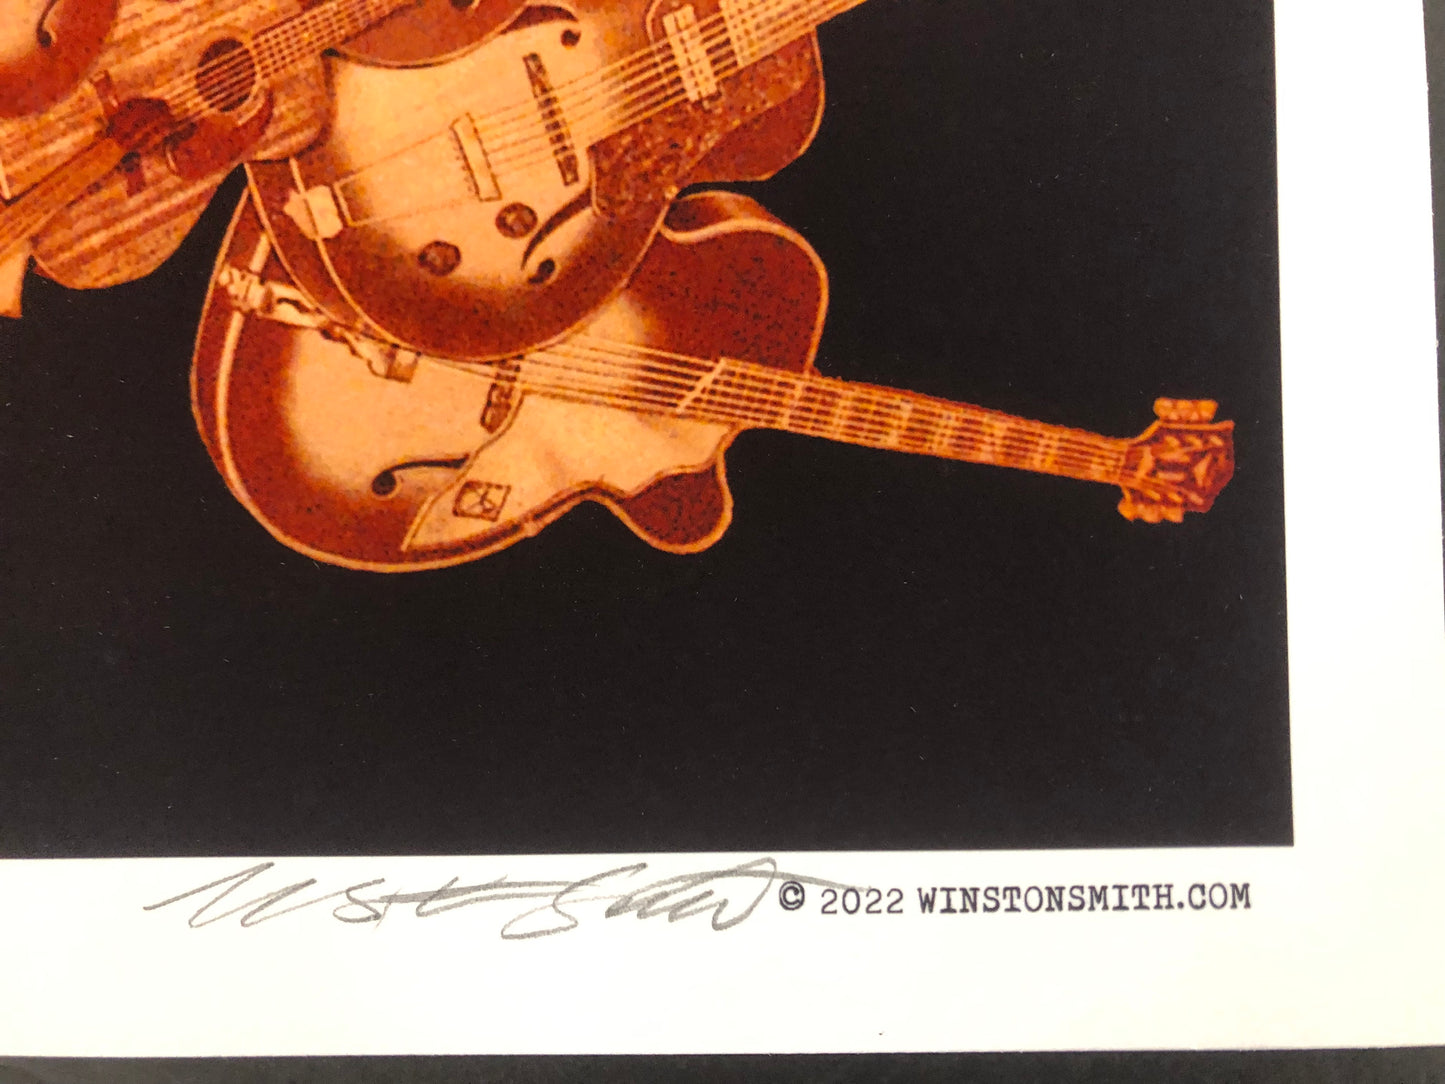 Winston Smith "Guitars" Print